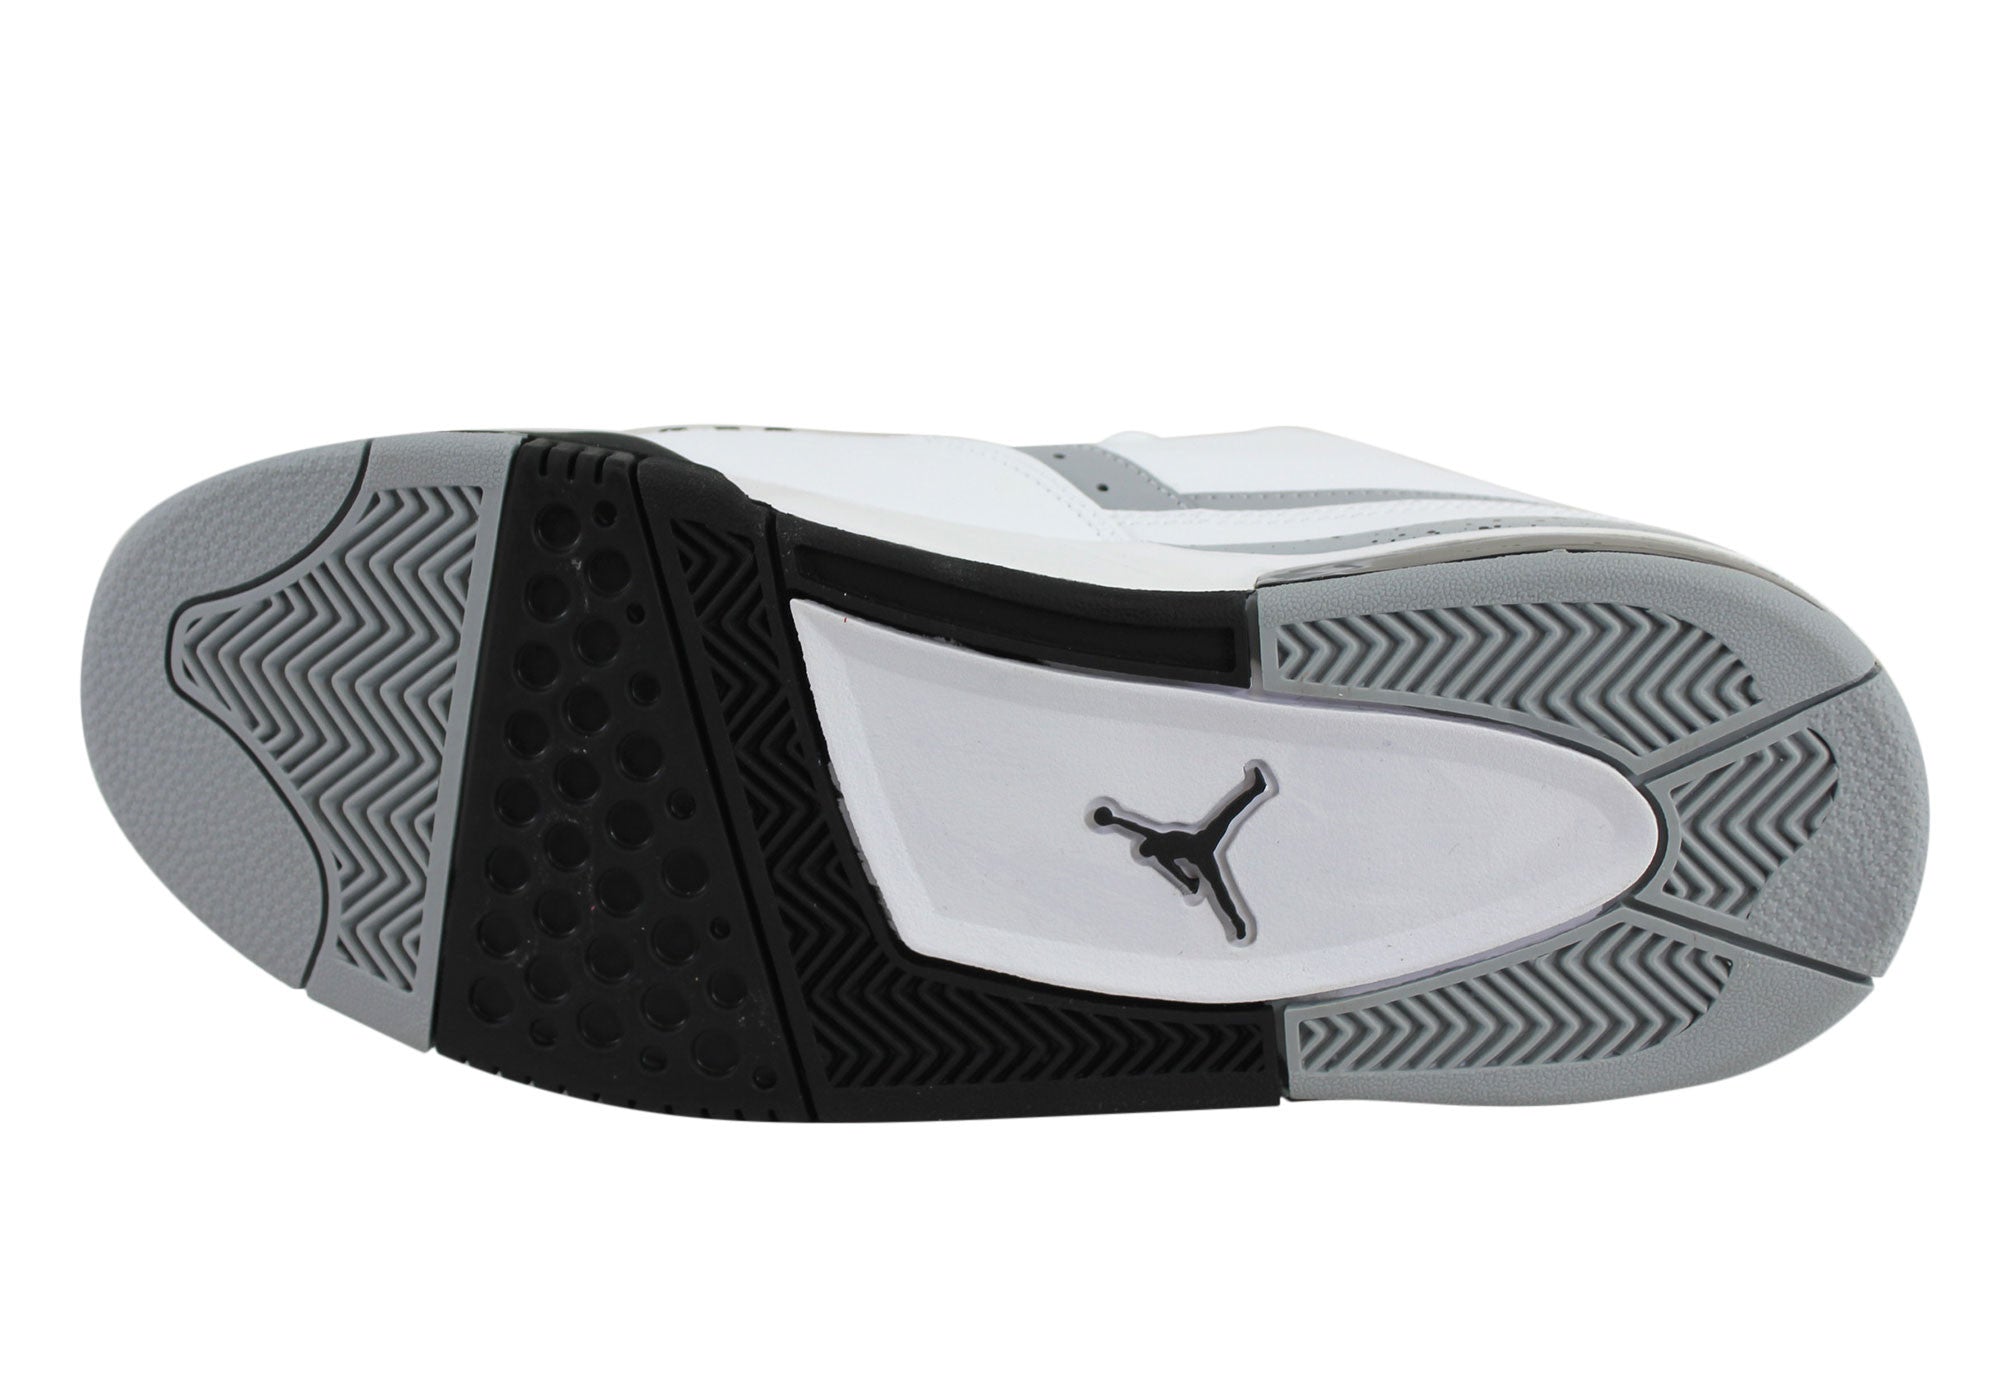 Nike Jordan Flight 23 Mens Basketball Shoes/Hi Tops/Boots